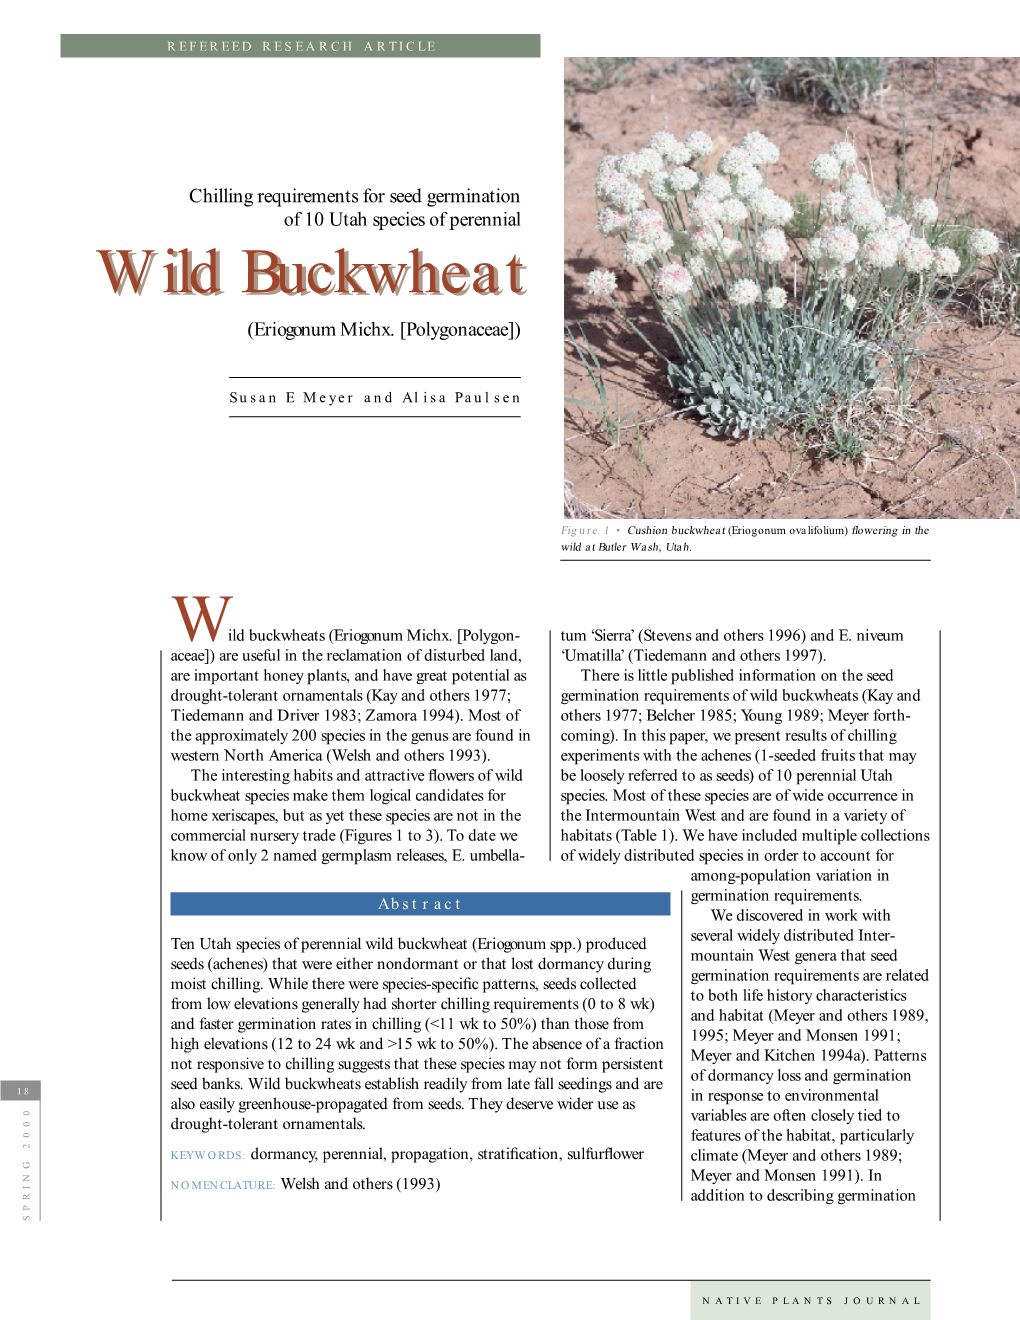 Wild Buckwheatbuckwheat (Eriogonum Michx